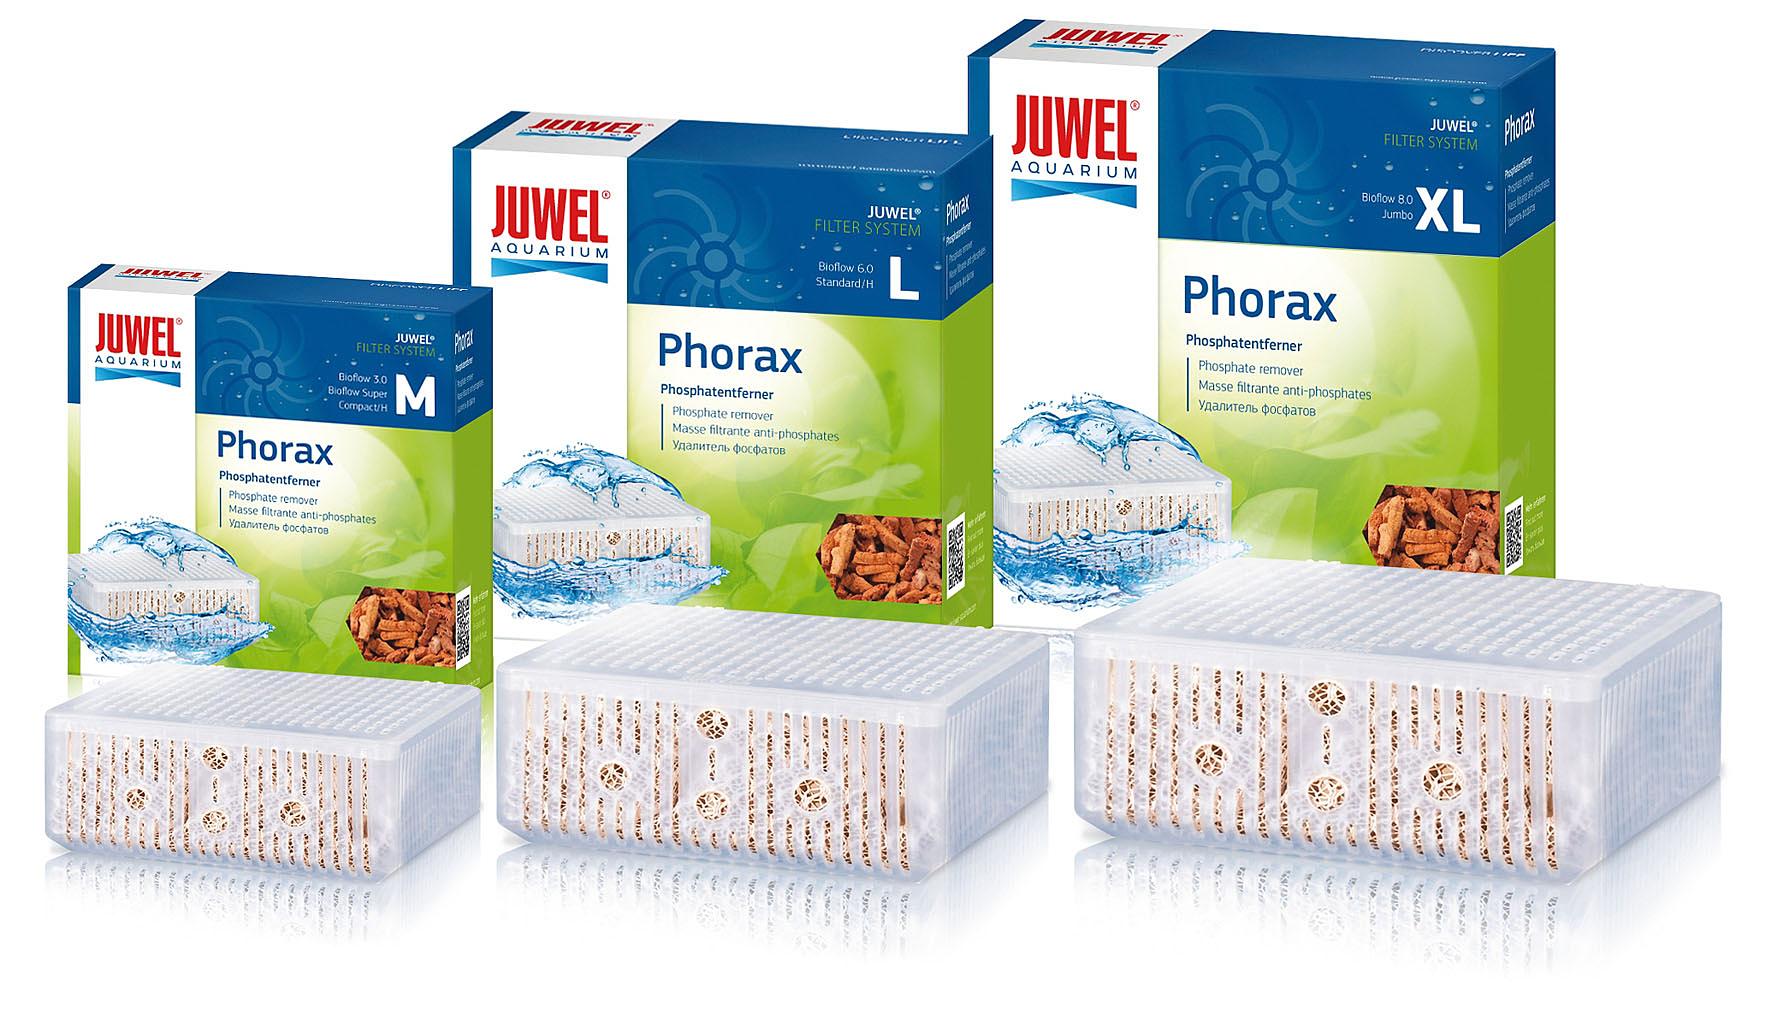 Juwel Phorax materiau de filtration